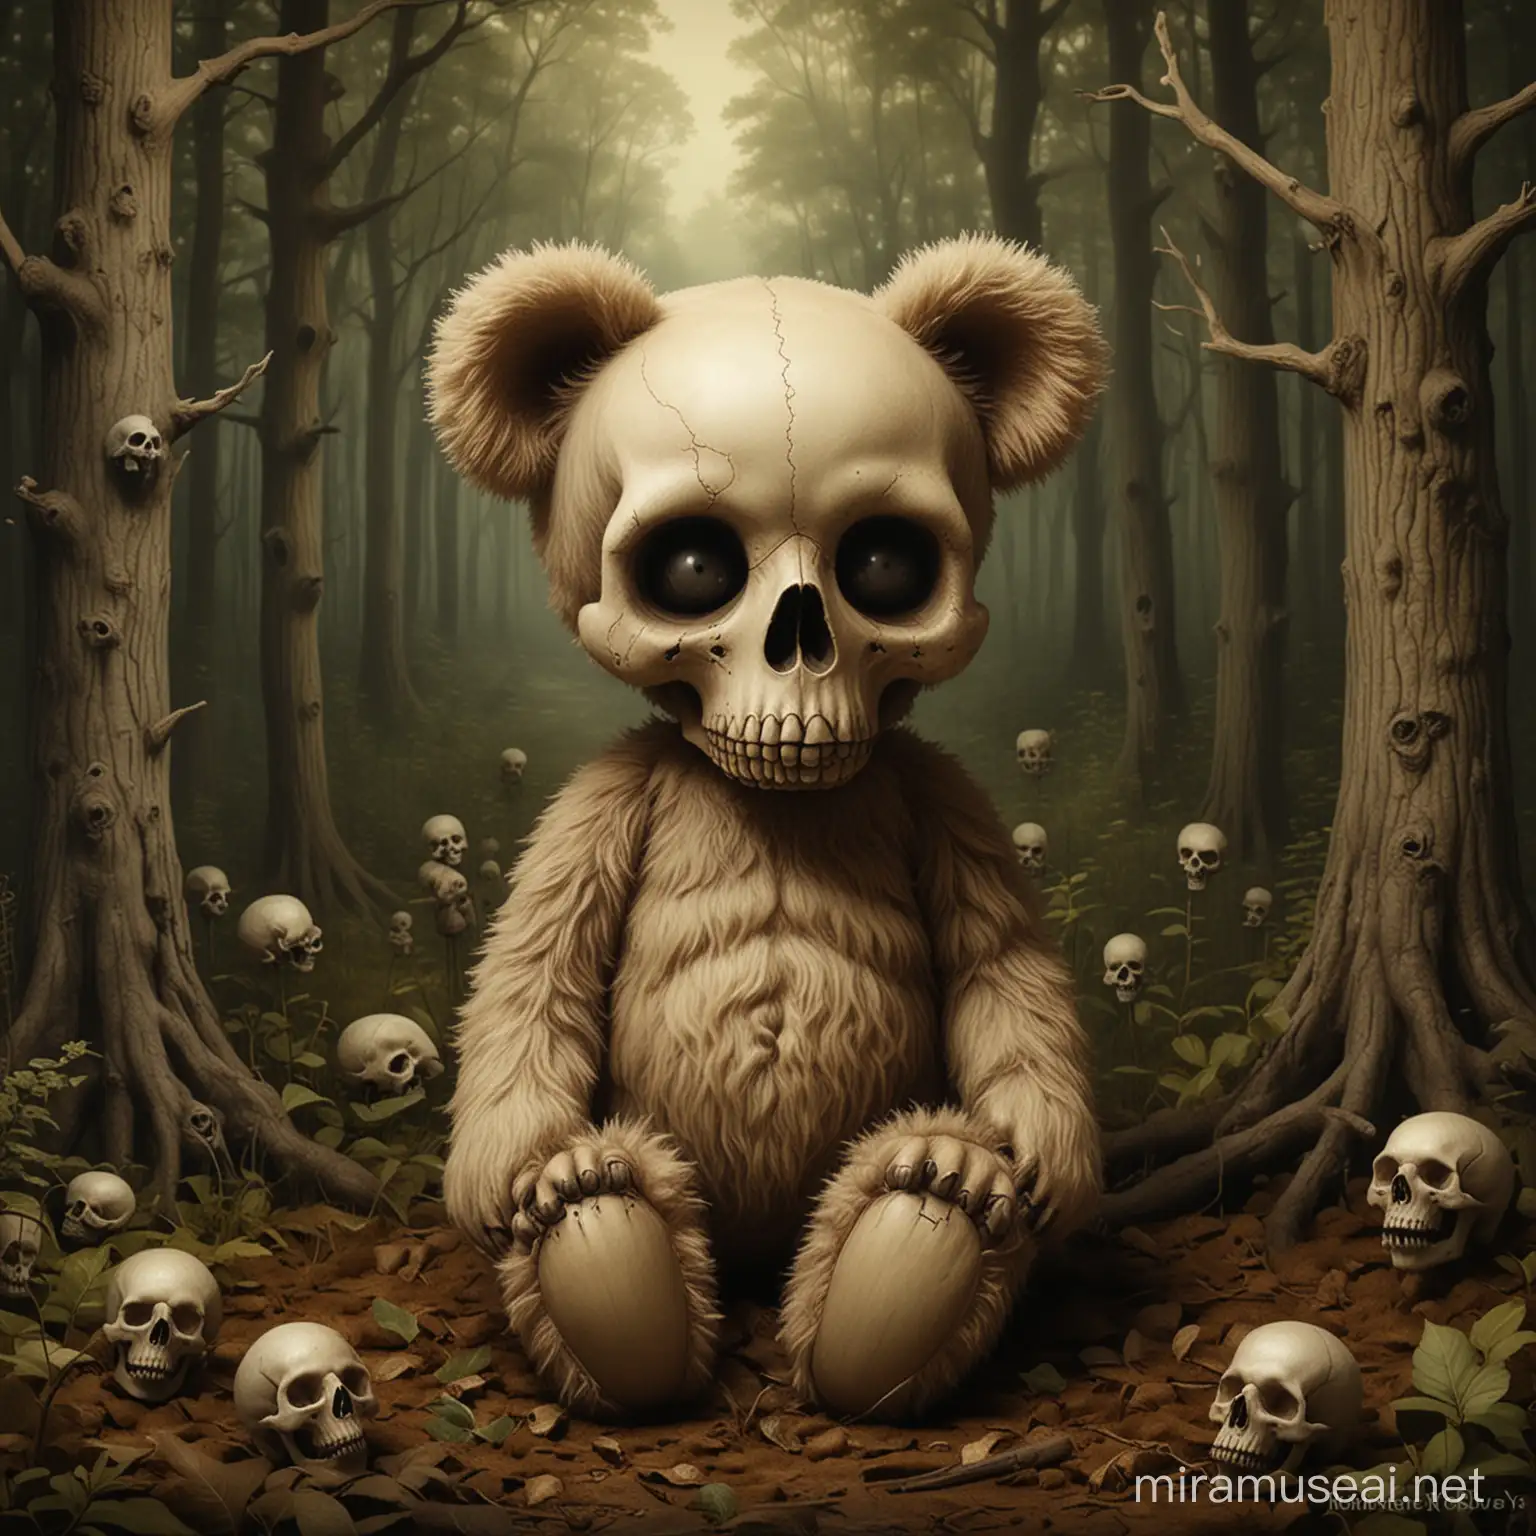 Teddy Bear with Human Skull in Spooky Woodland Mark Ryden Style